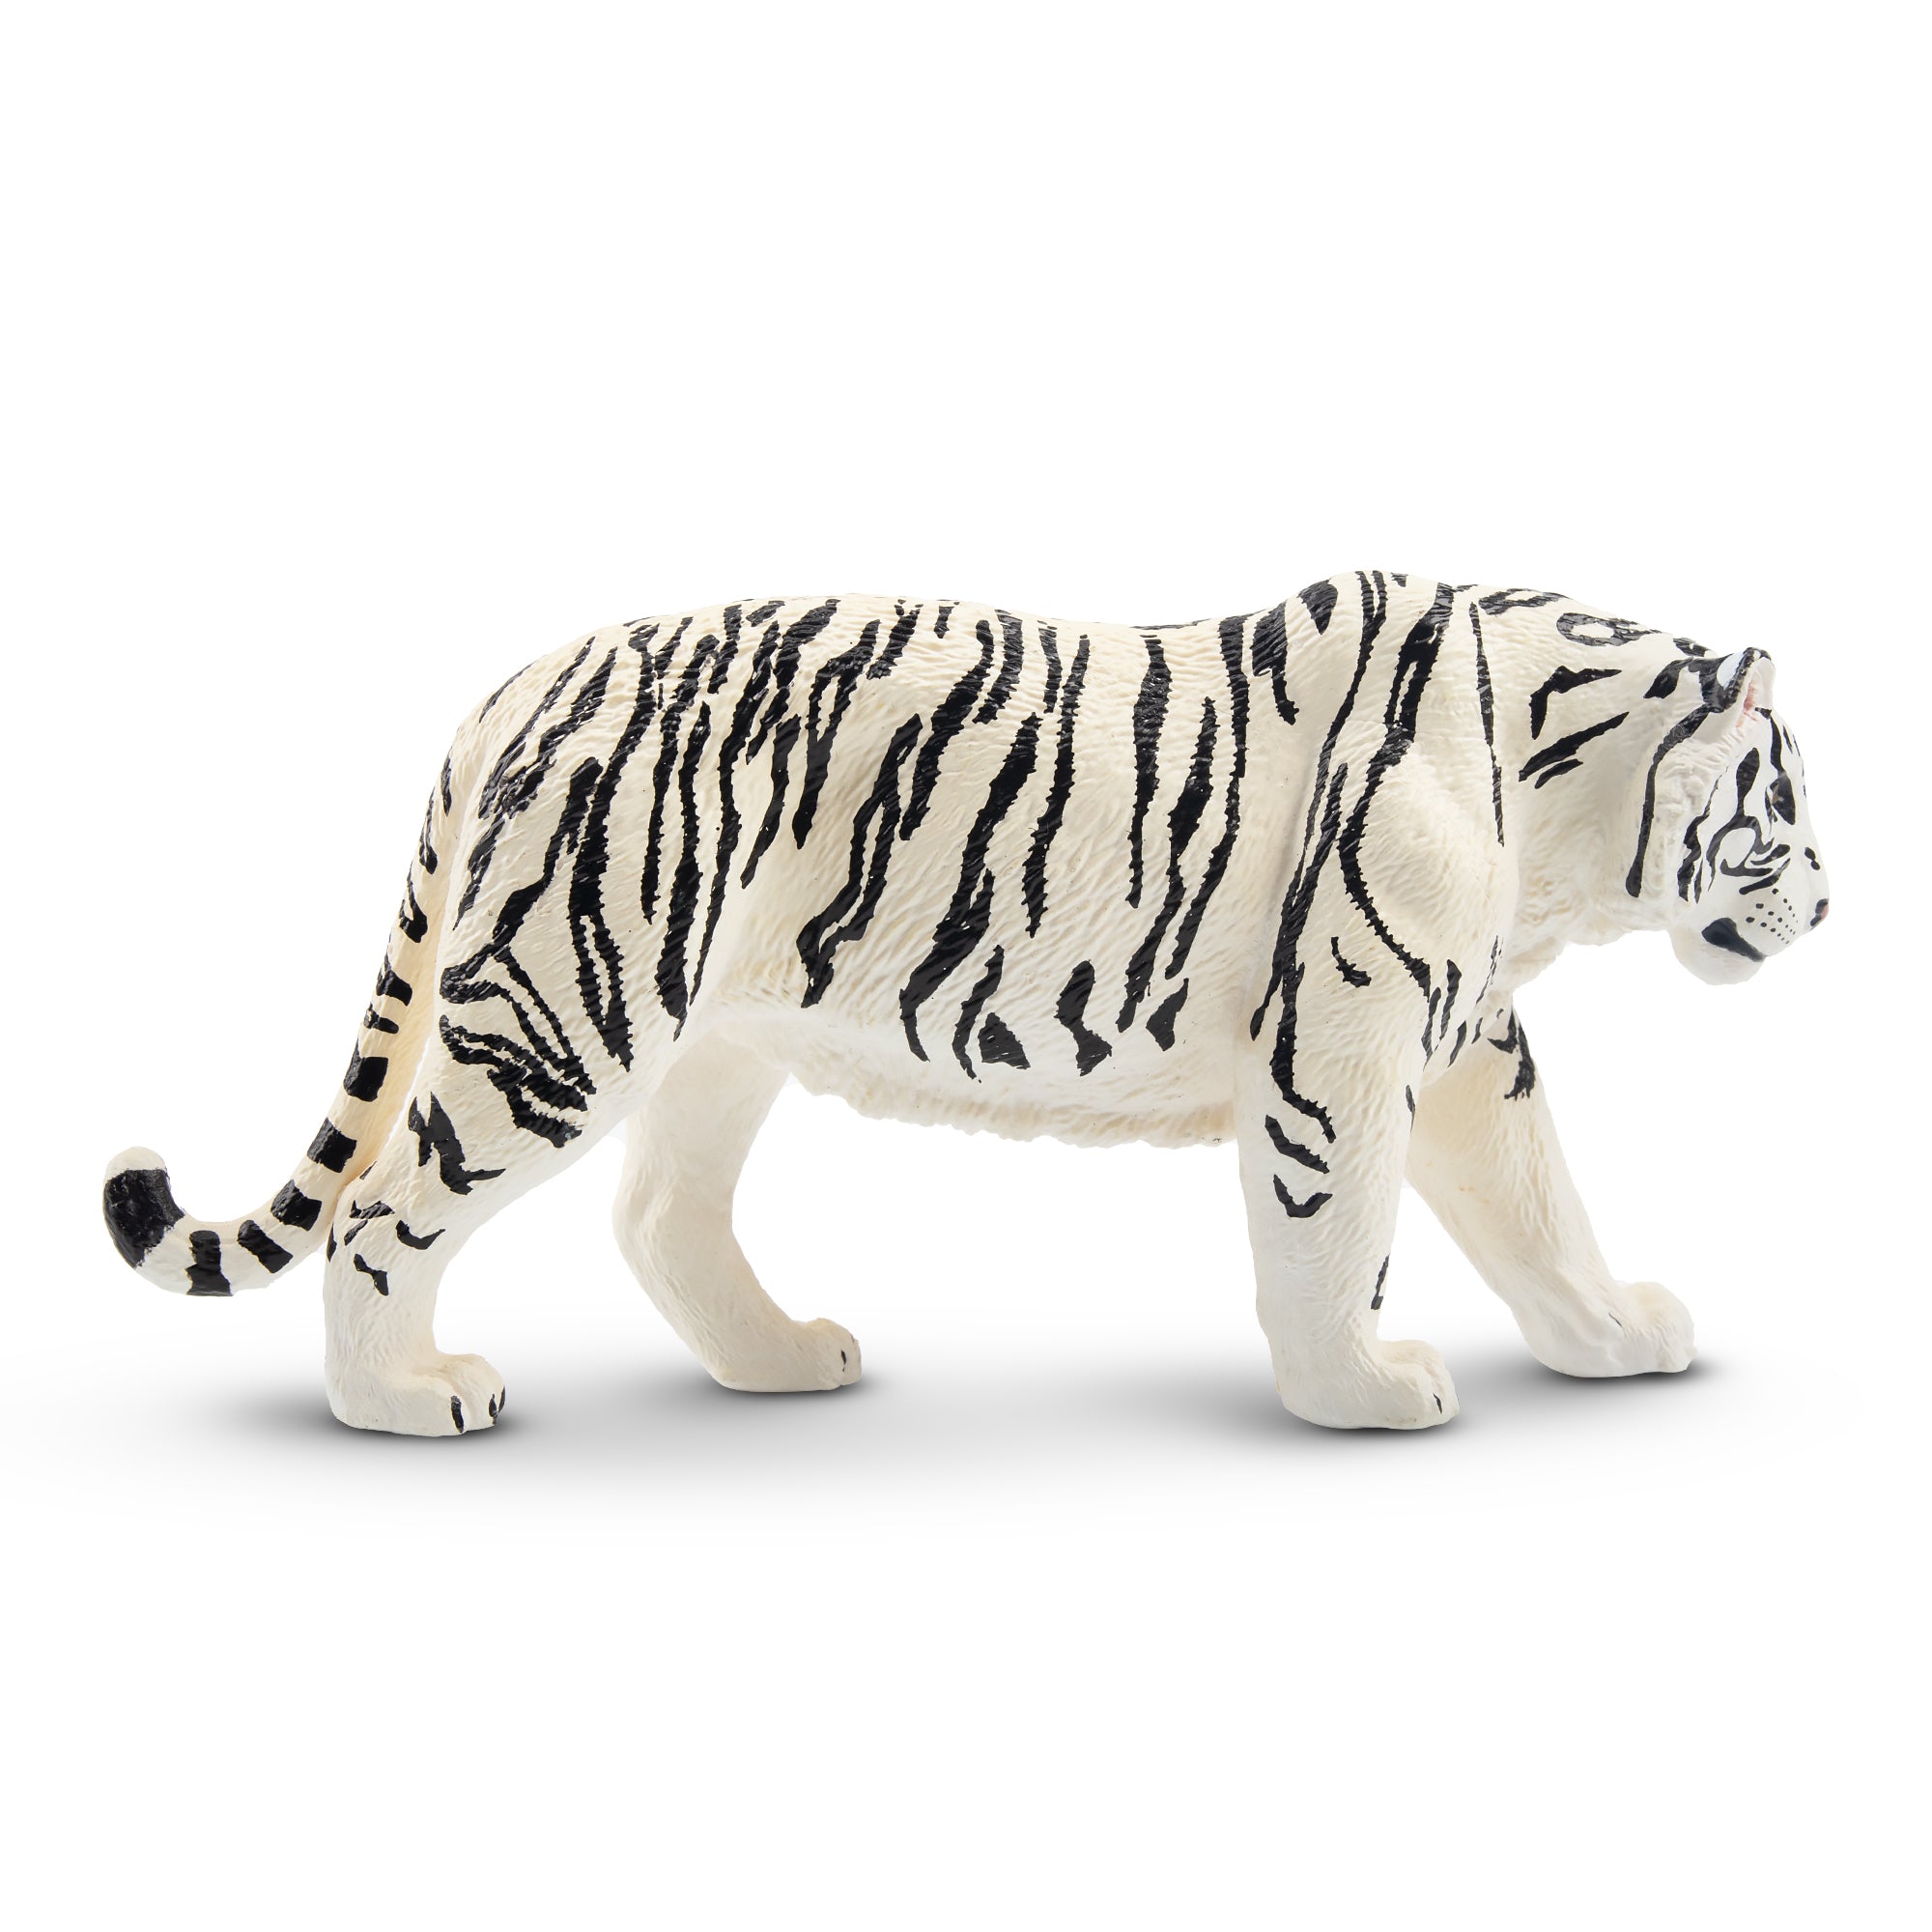 Toymany White Tiger Figurine Toy-2